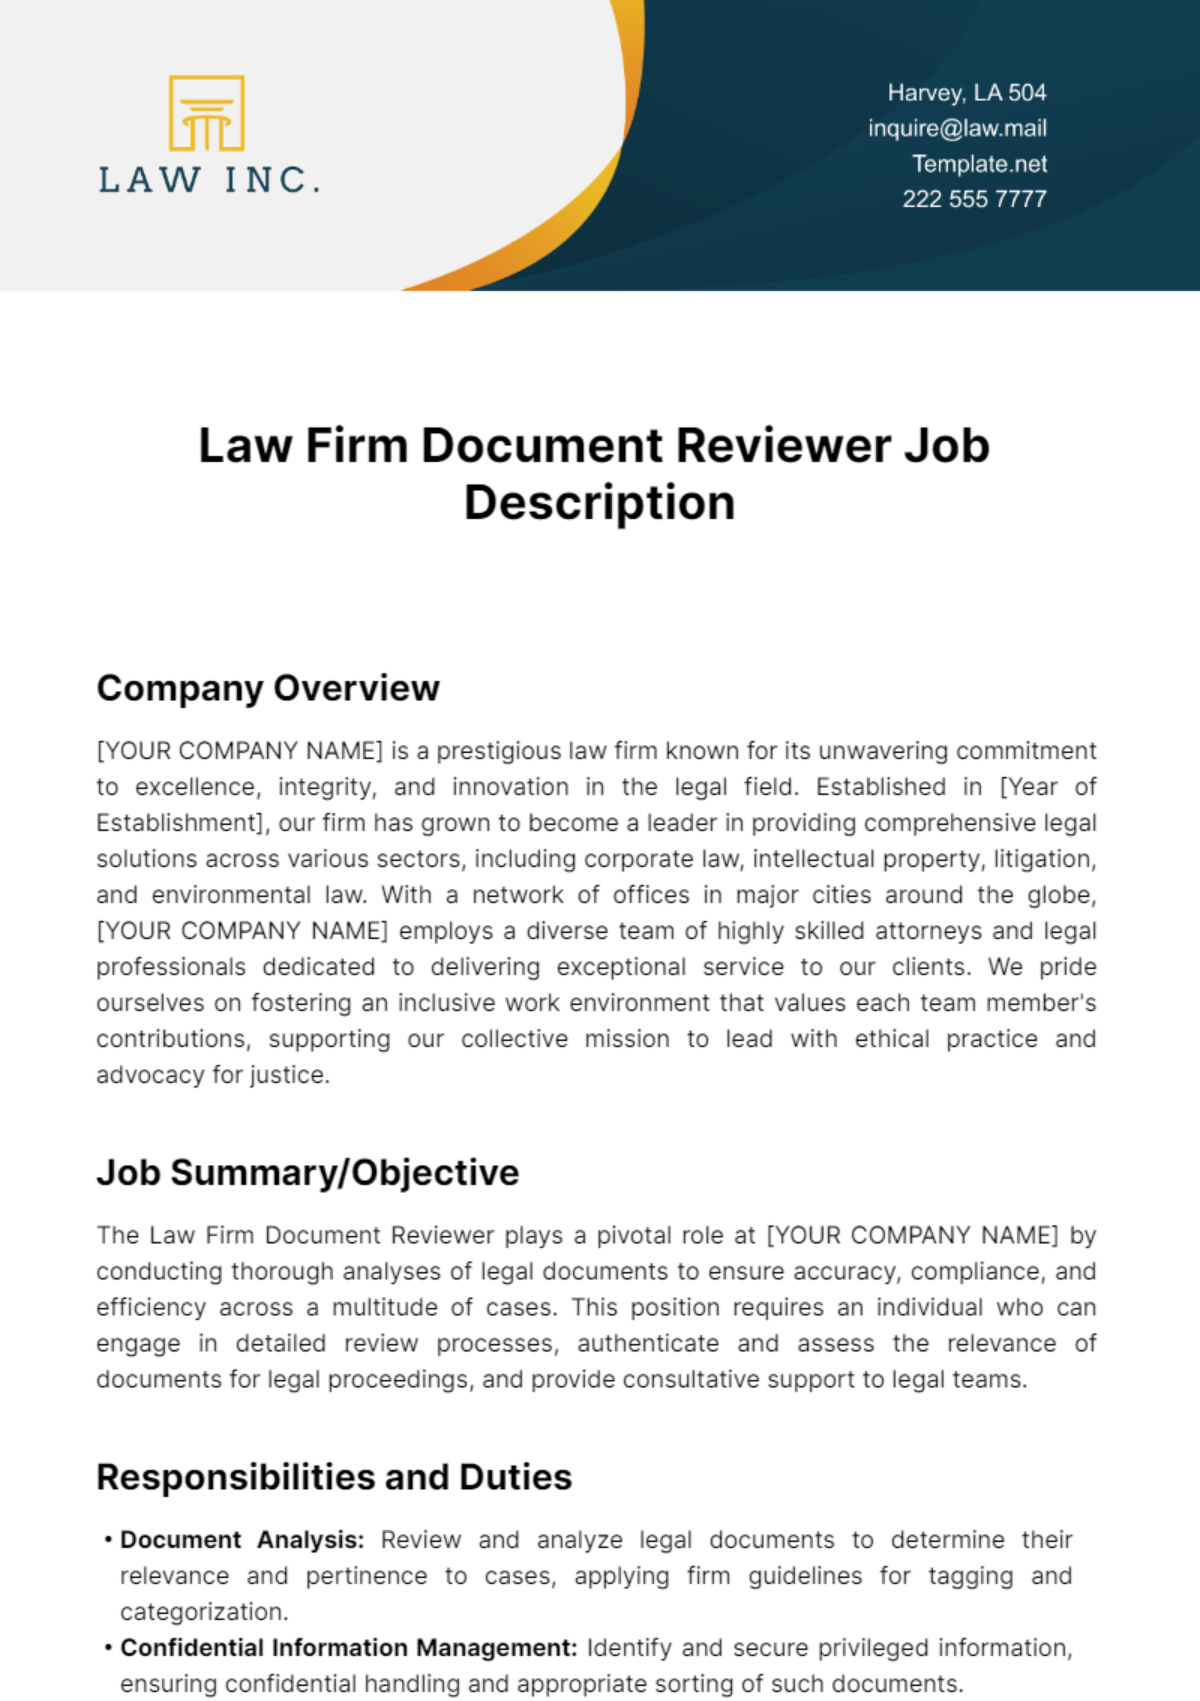 Law Firm Document Reviewer Job Description Template